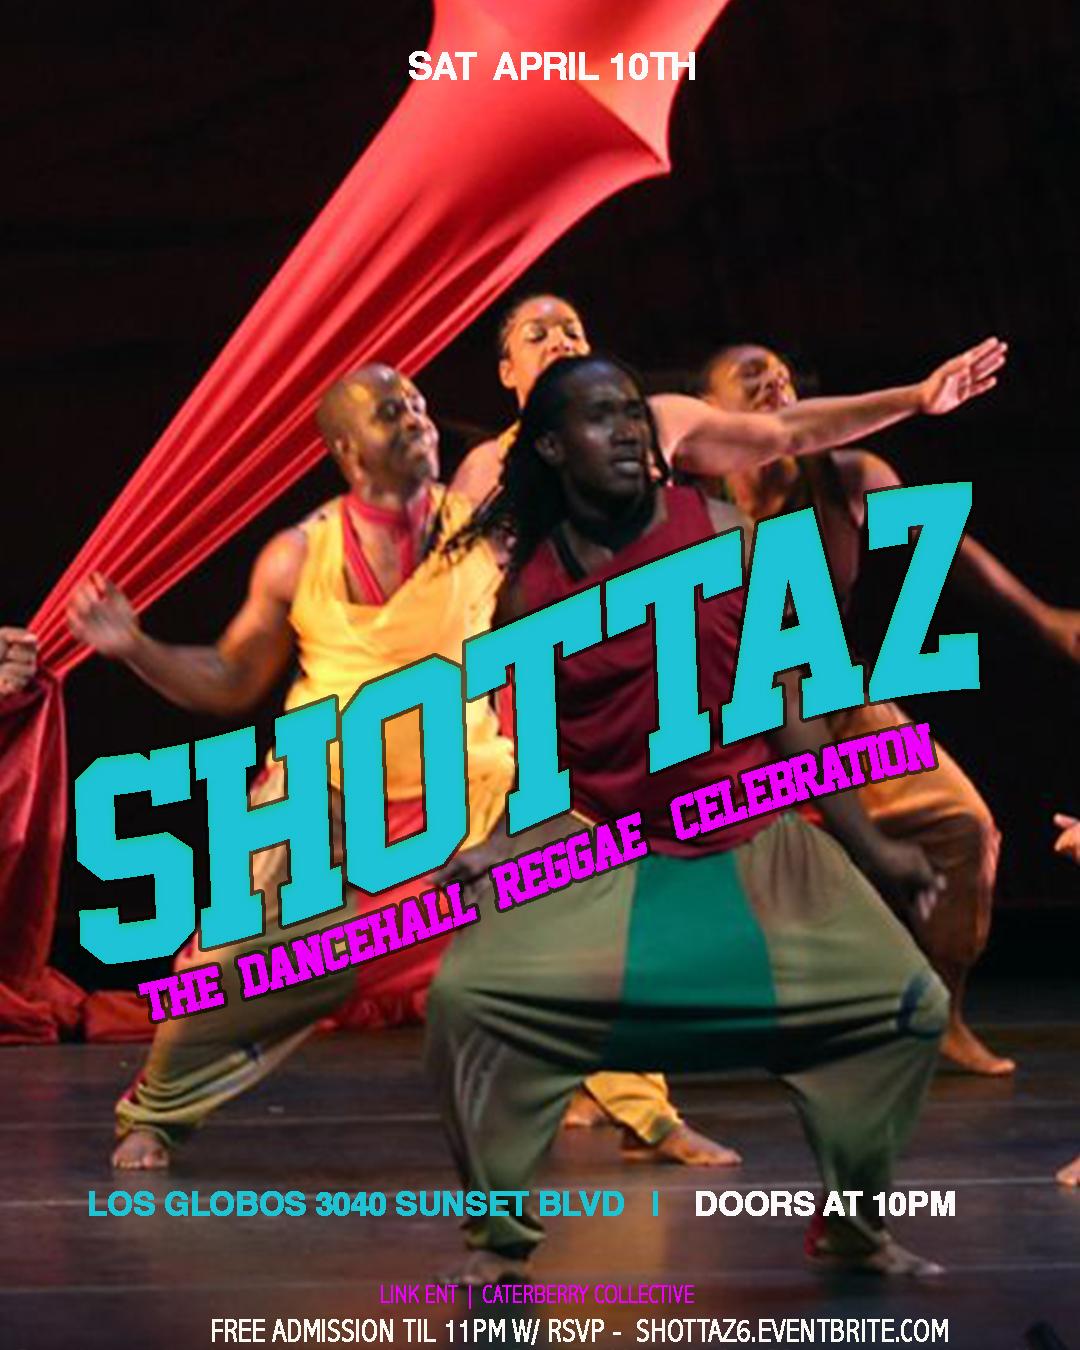 SHOTTAZ! - The DanceHall / Reggae Celebration